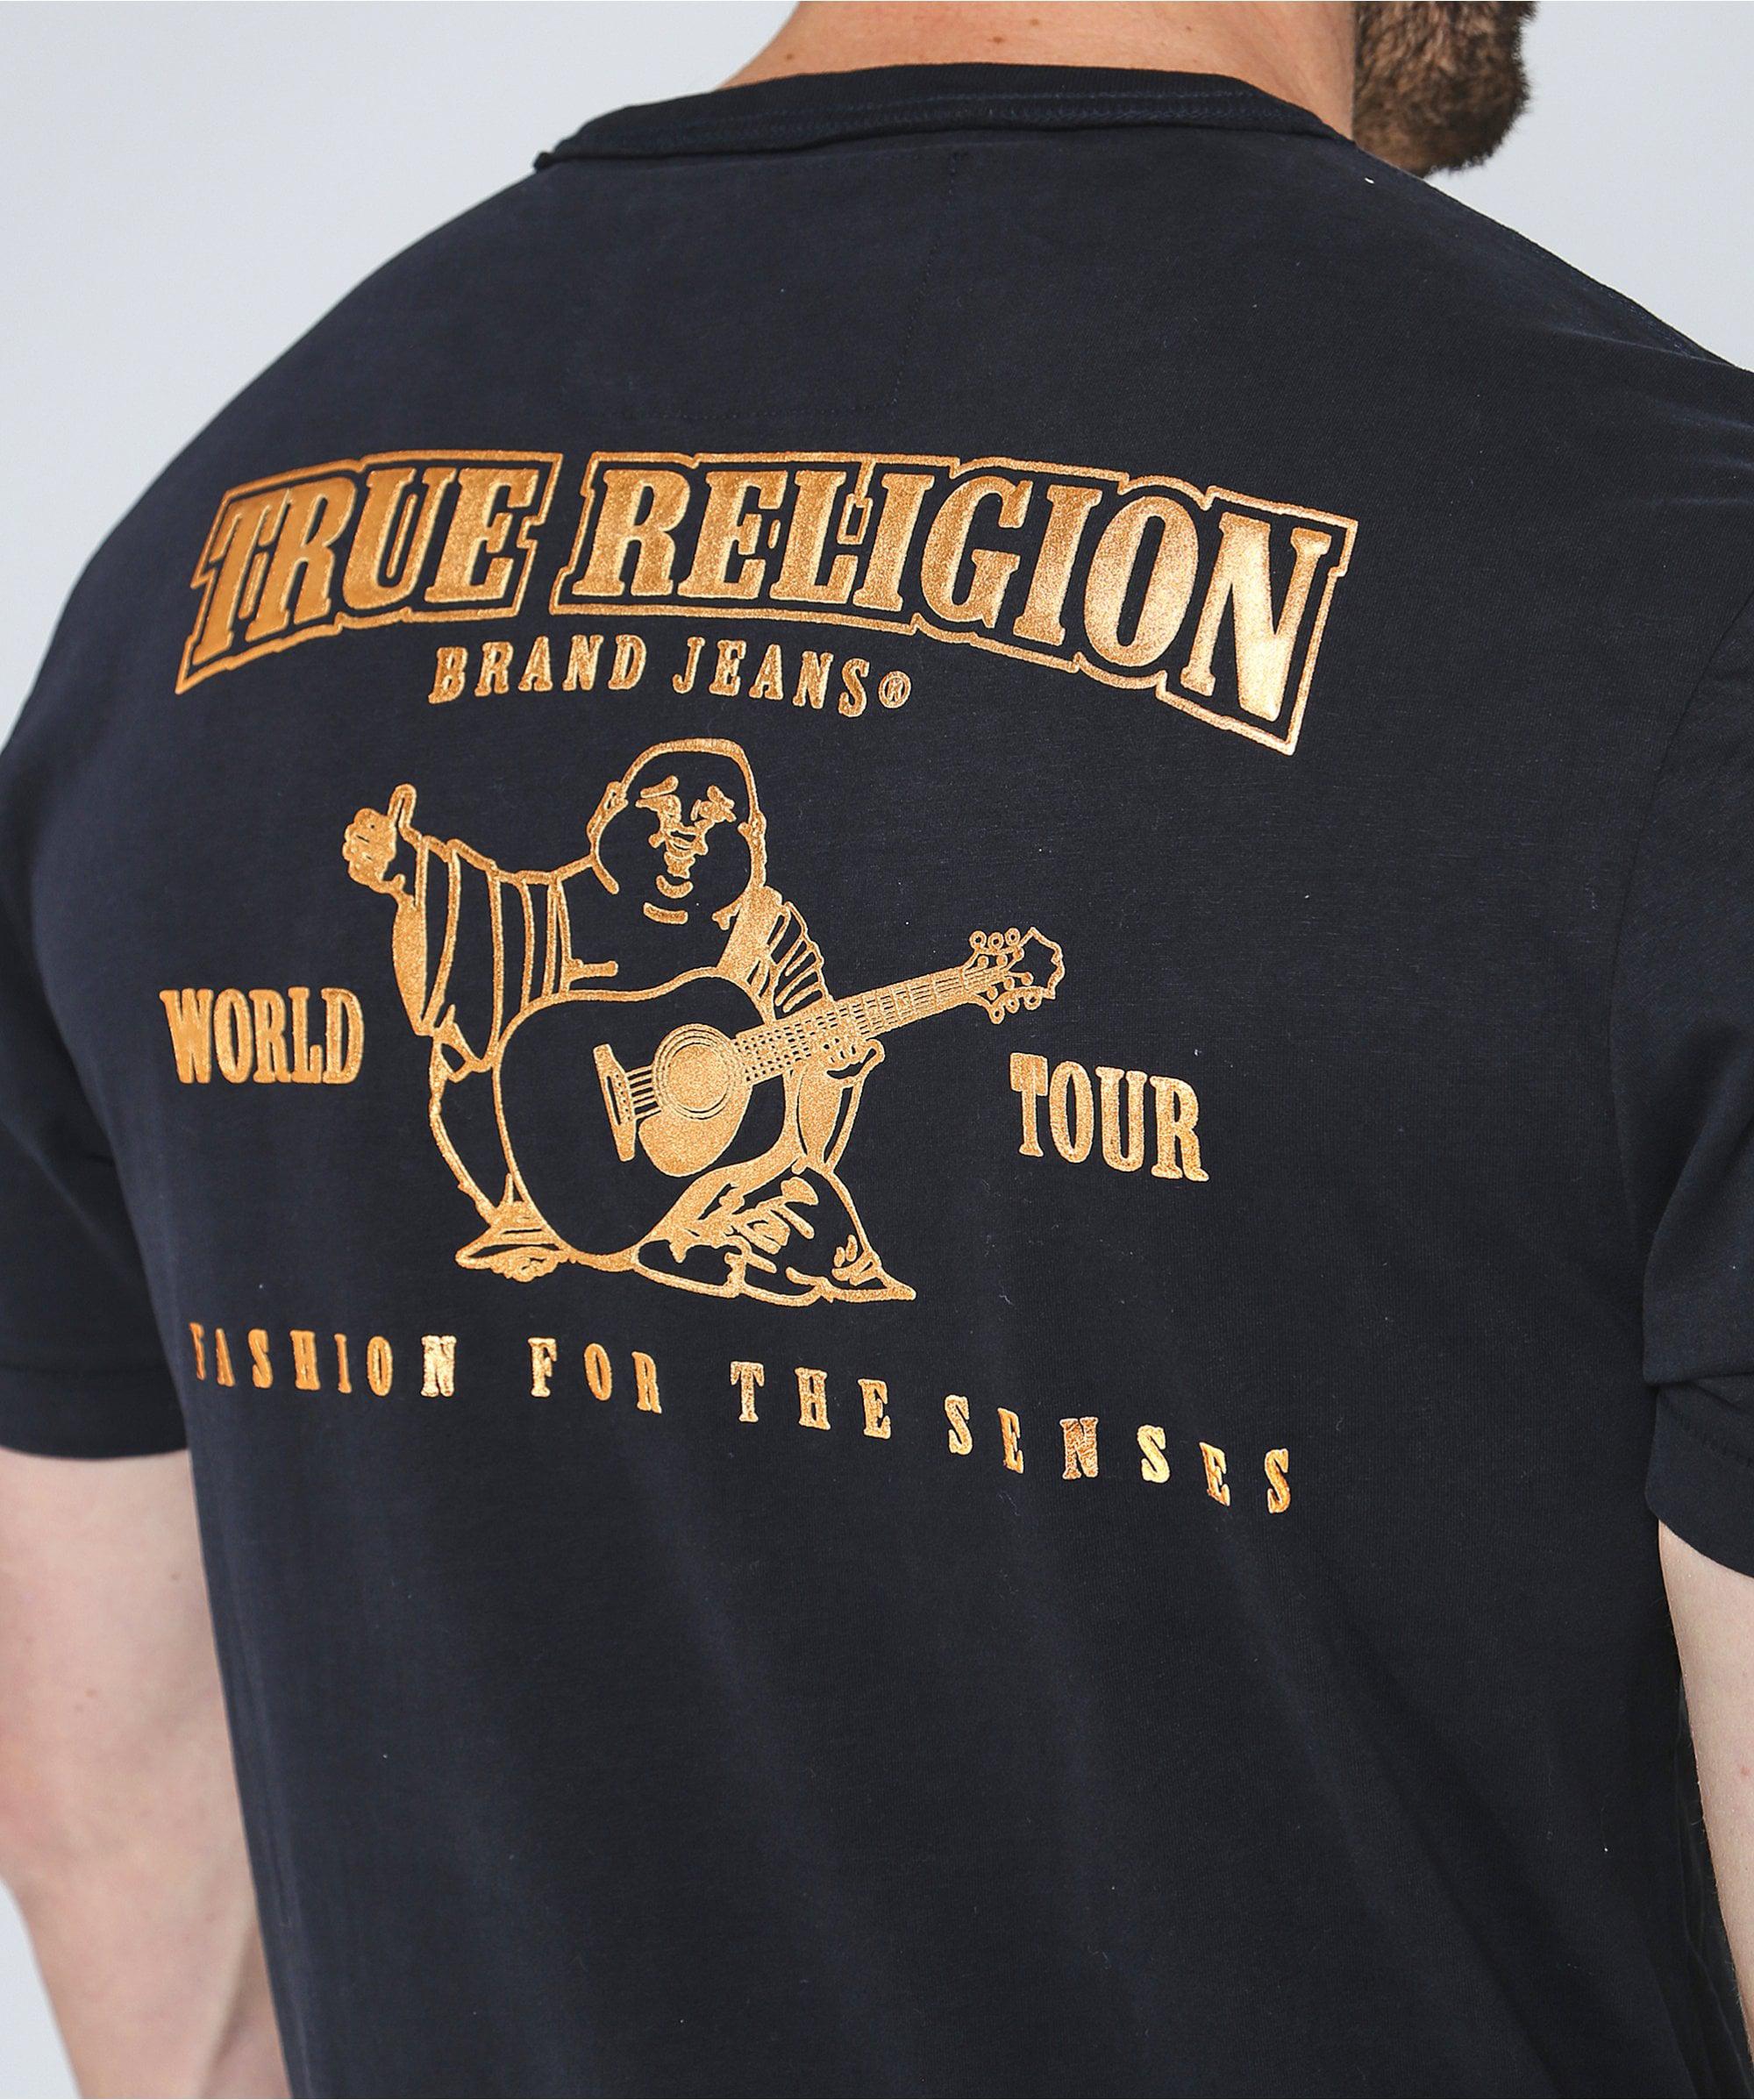 true religion metallic print t shirt